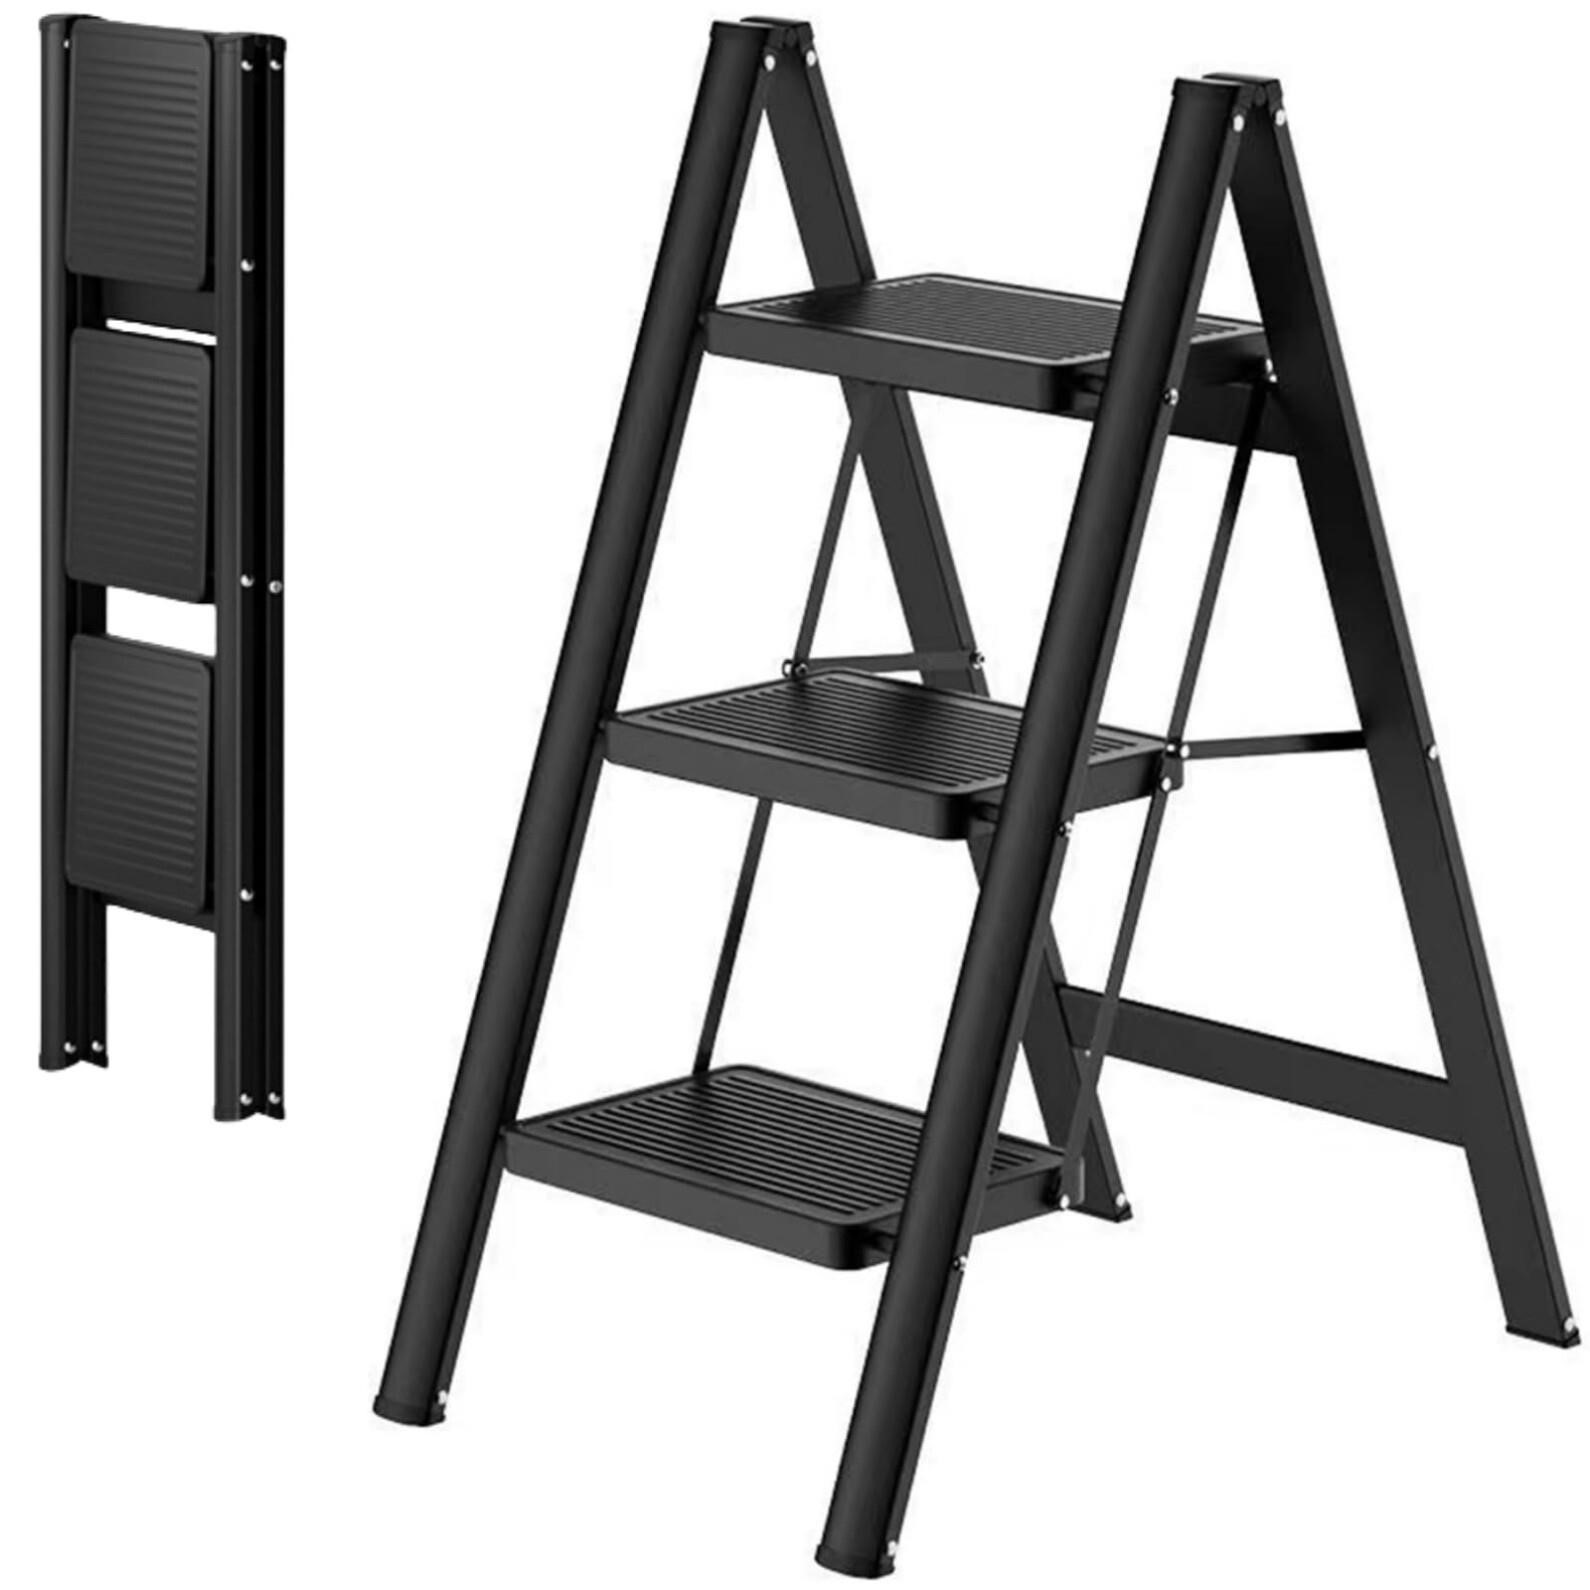 3 Step Ladder,Folding Step Stool with Wide Anti-Sl